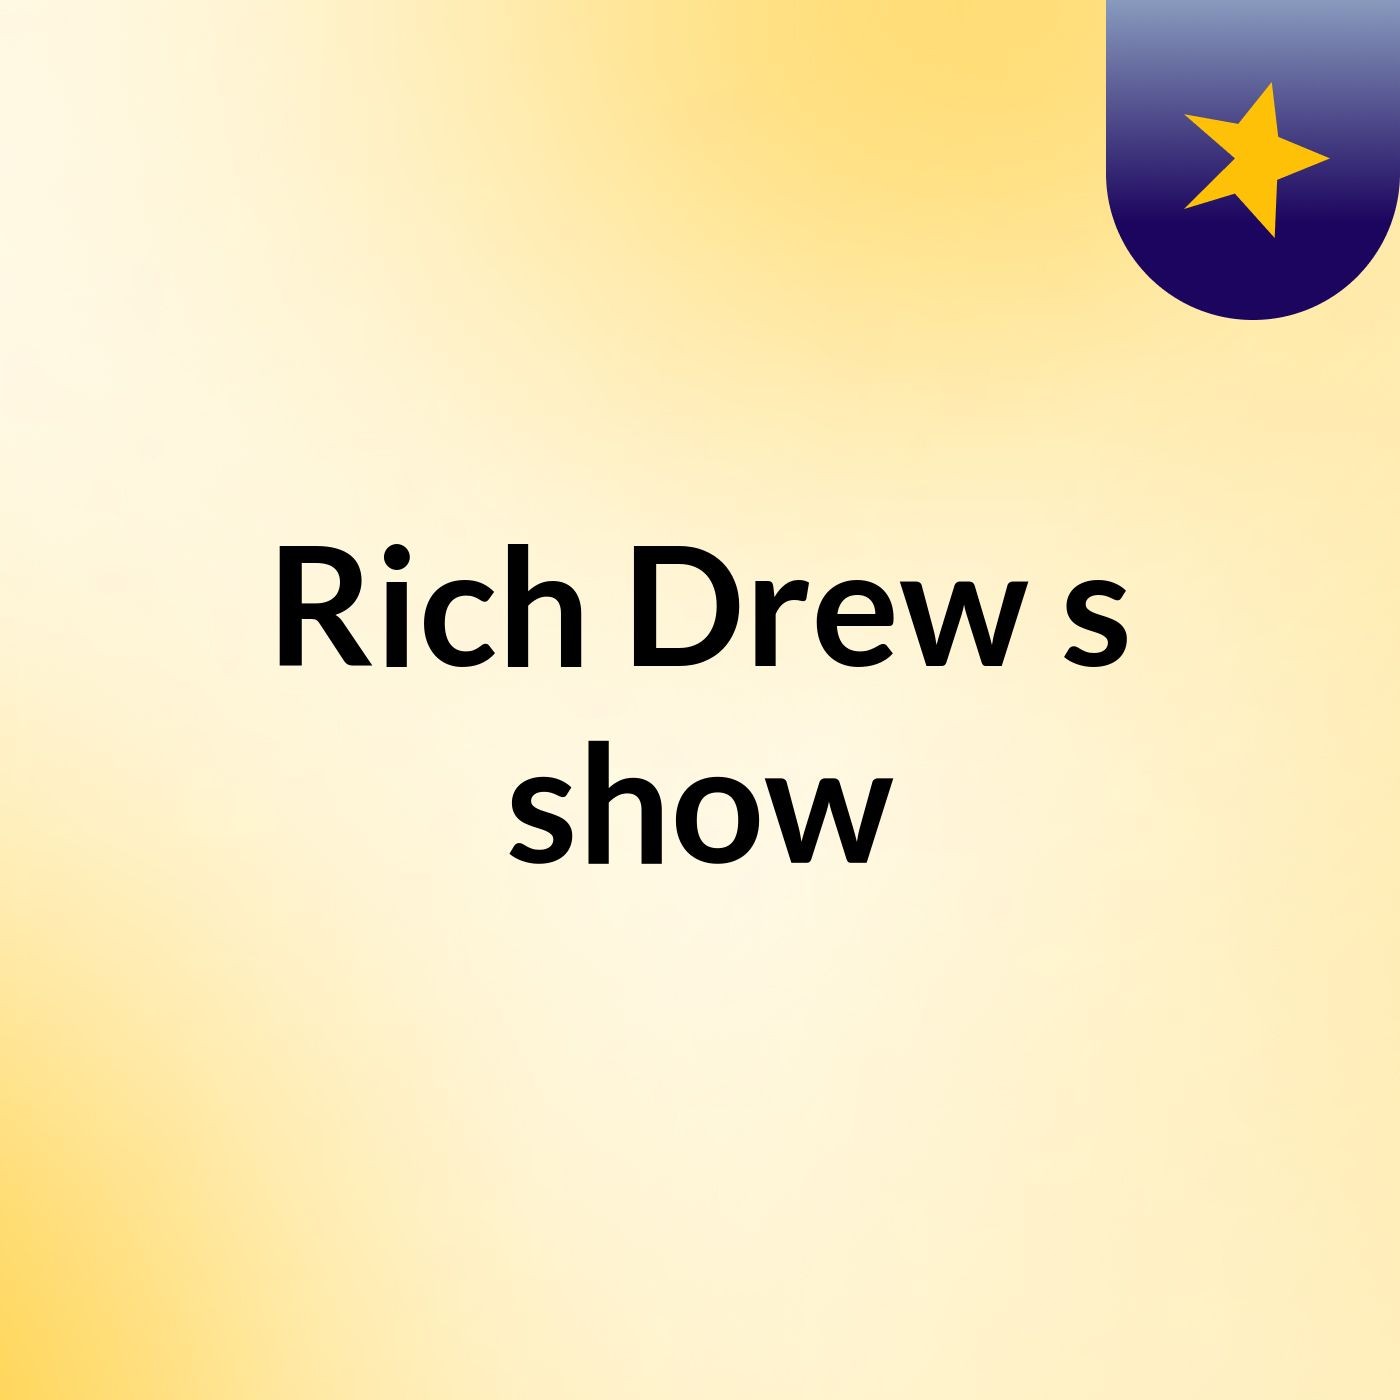 Rich Drew's show